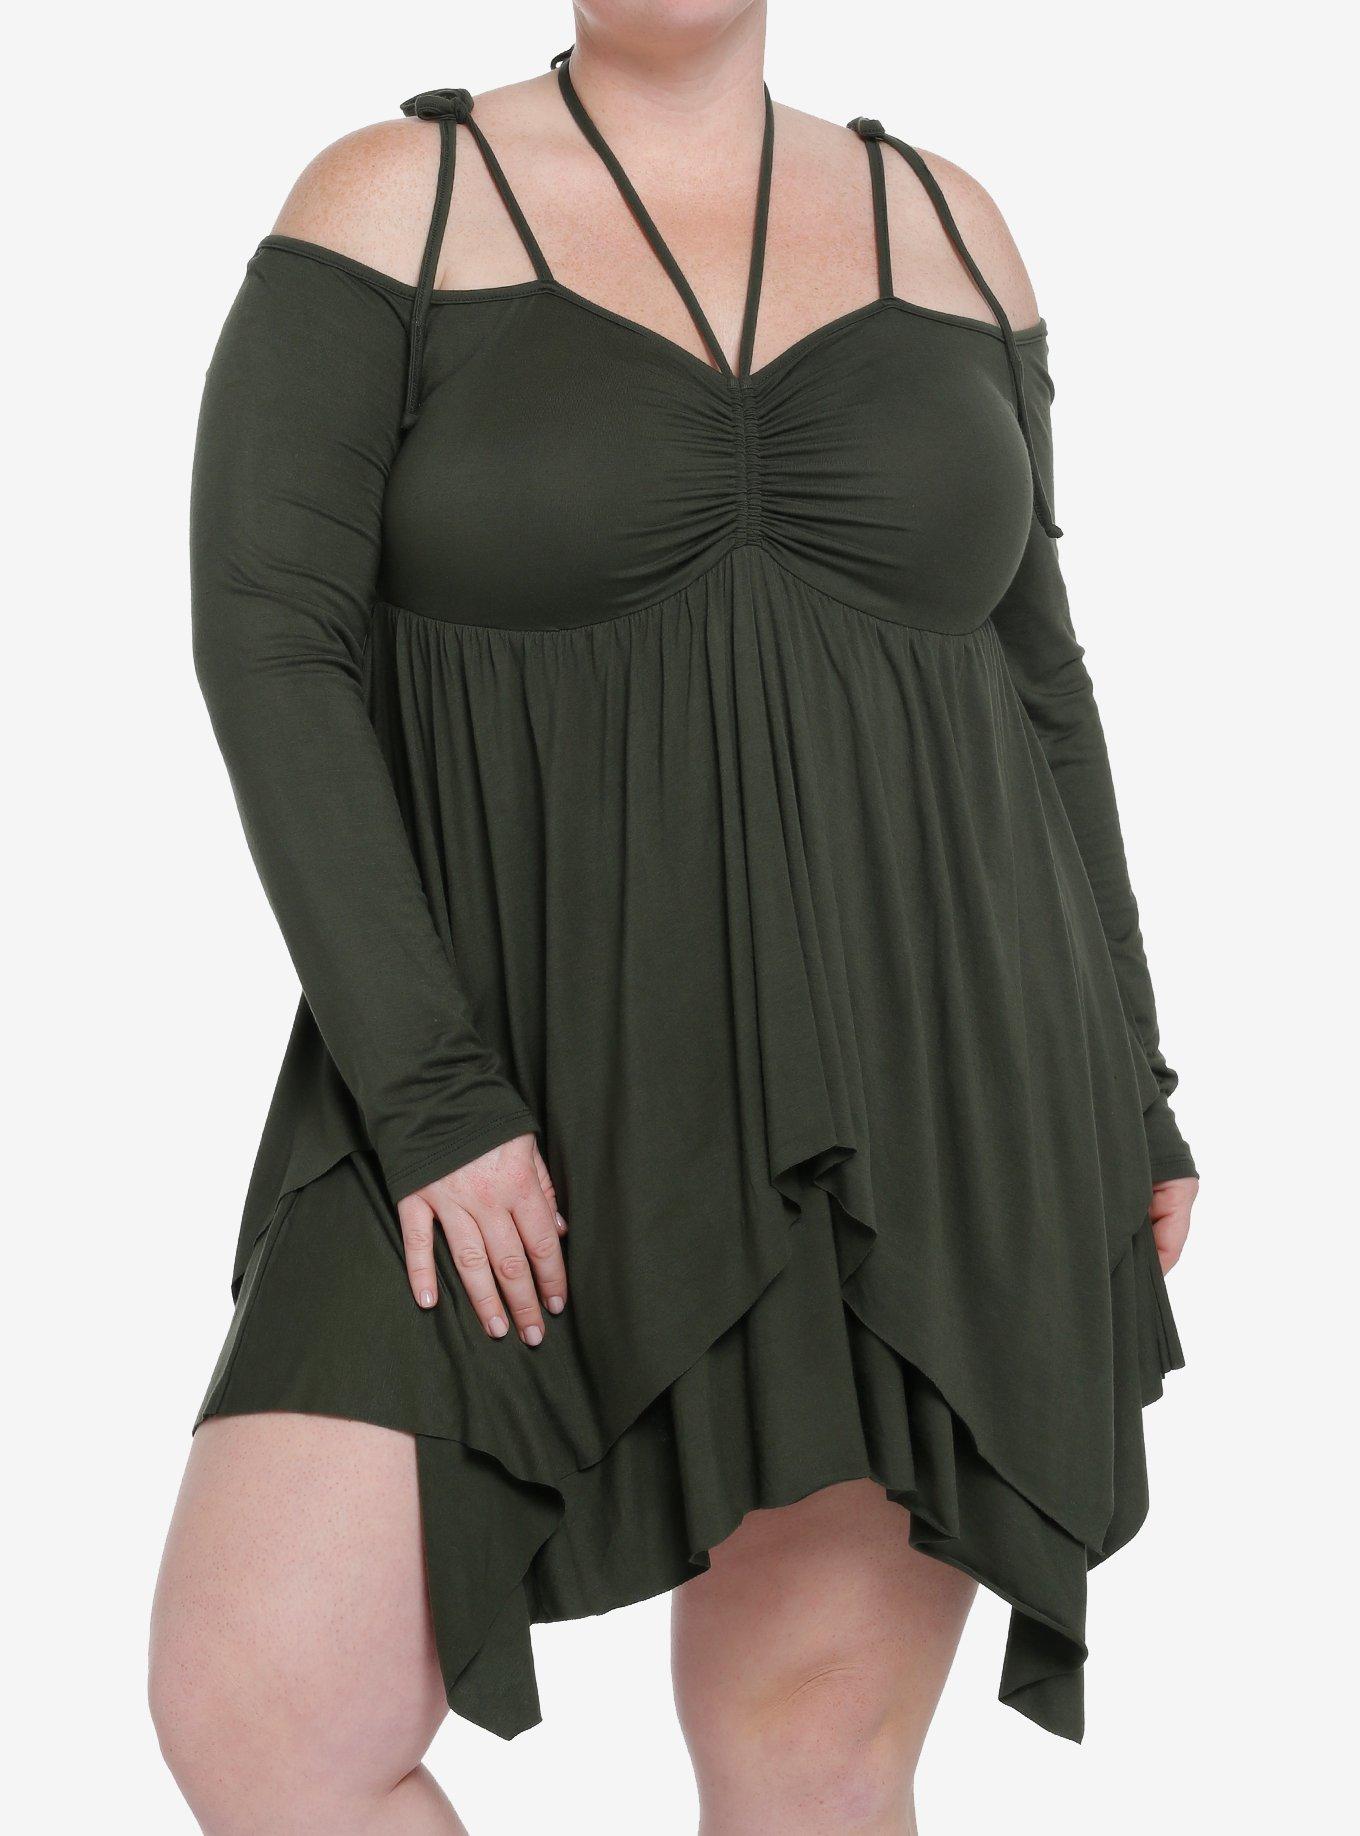 Thorn & Fable Green Hanky Hem Girls Cold Shoulder Dress Plus Size